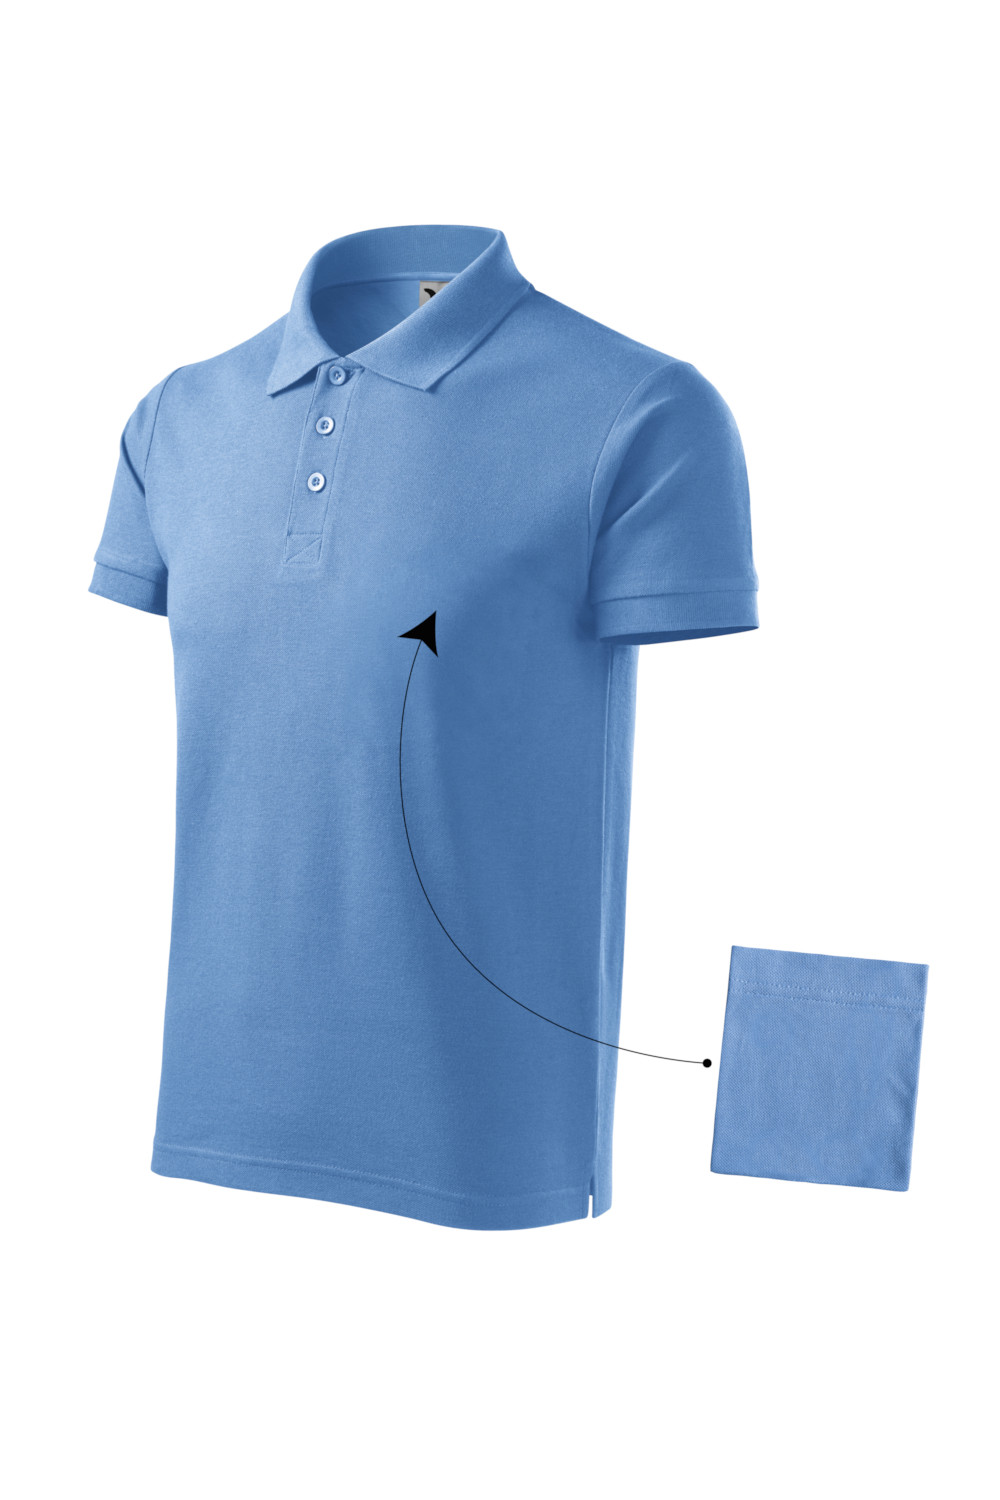 Koszulka Polo męska 100% bawełna 212 polo błękit